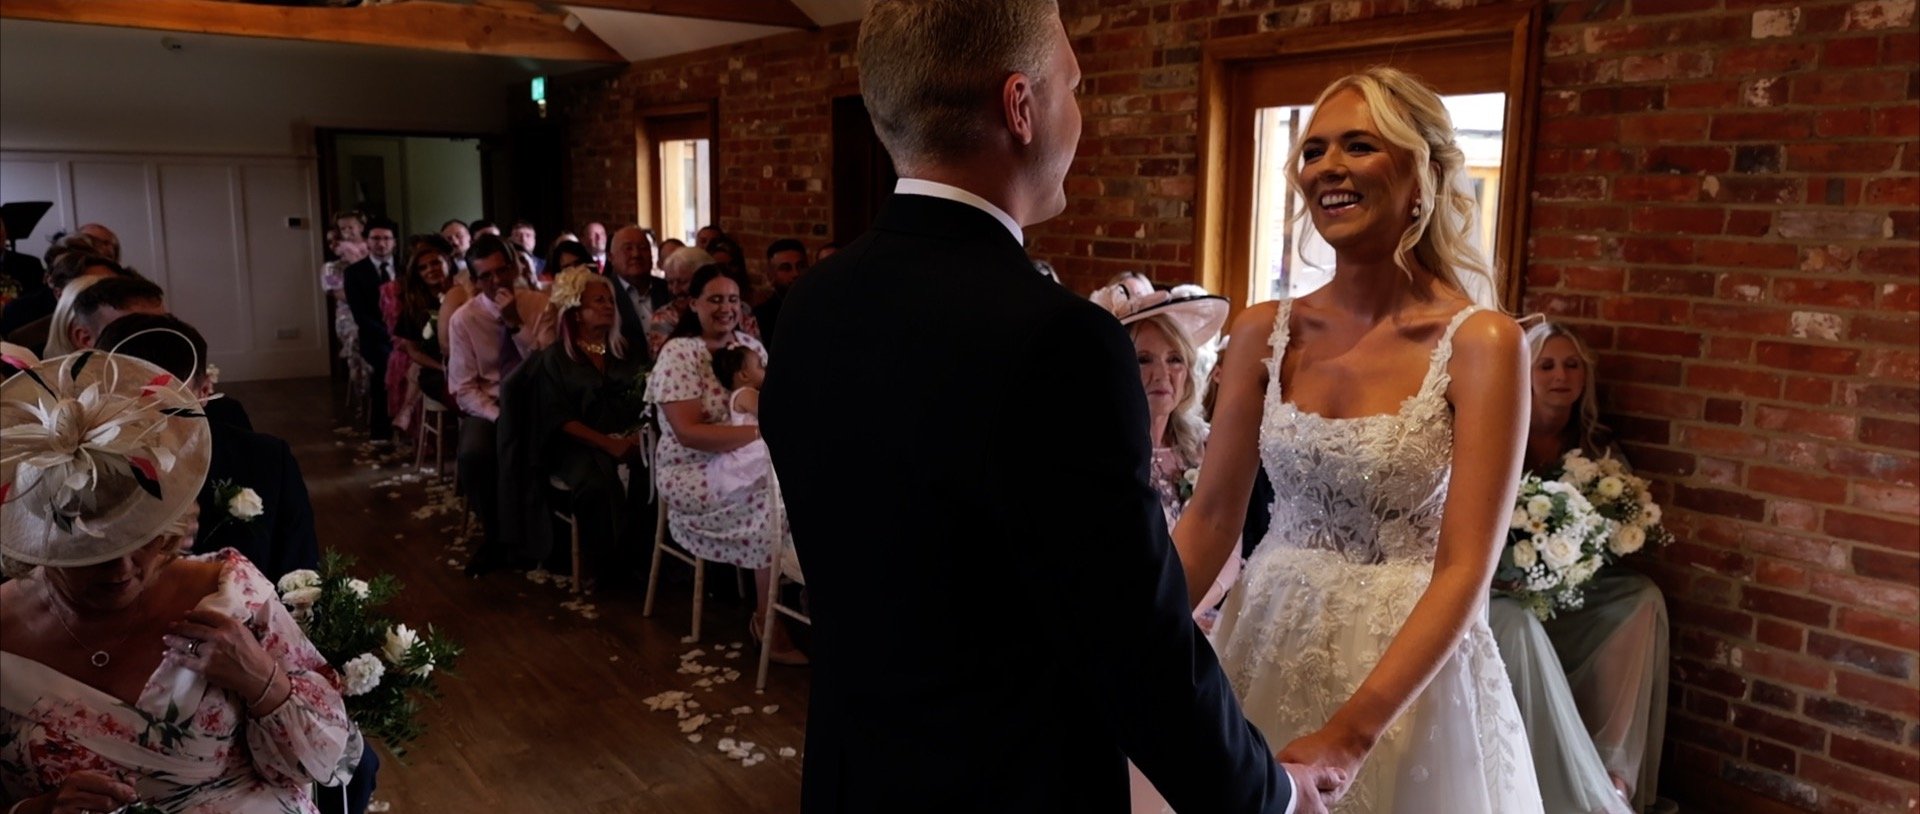 3 Cheers Media - Apton Hall Wedding Video - Ceremony beautiful bride happy.jpg